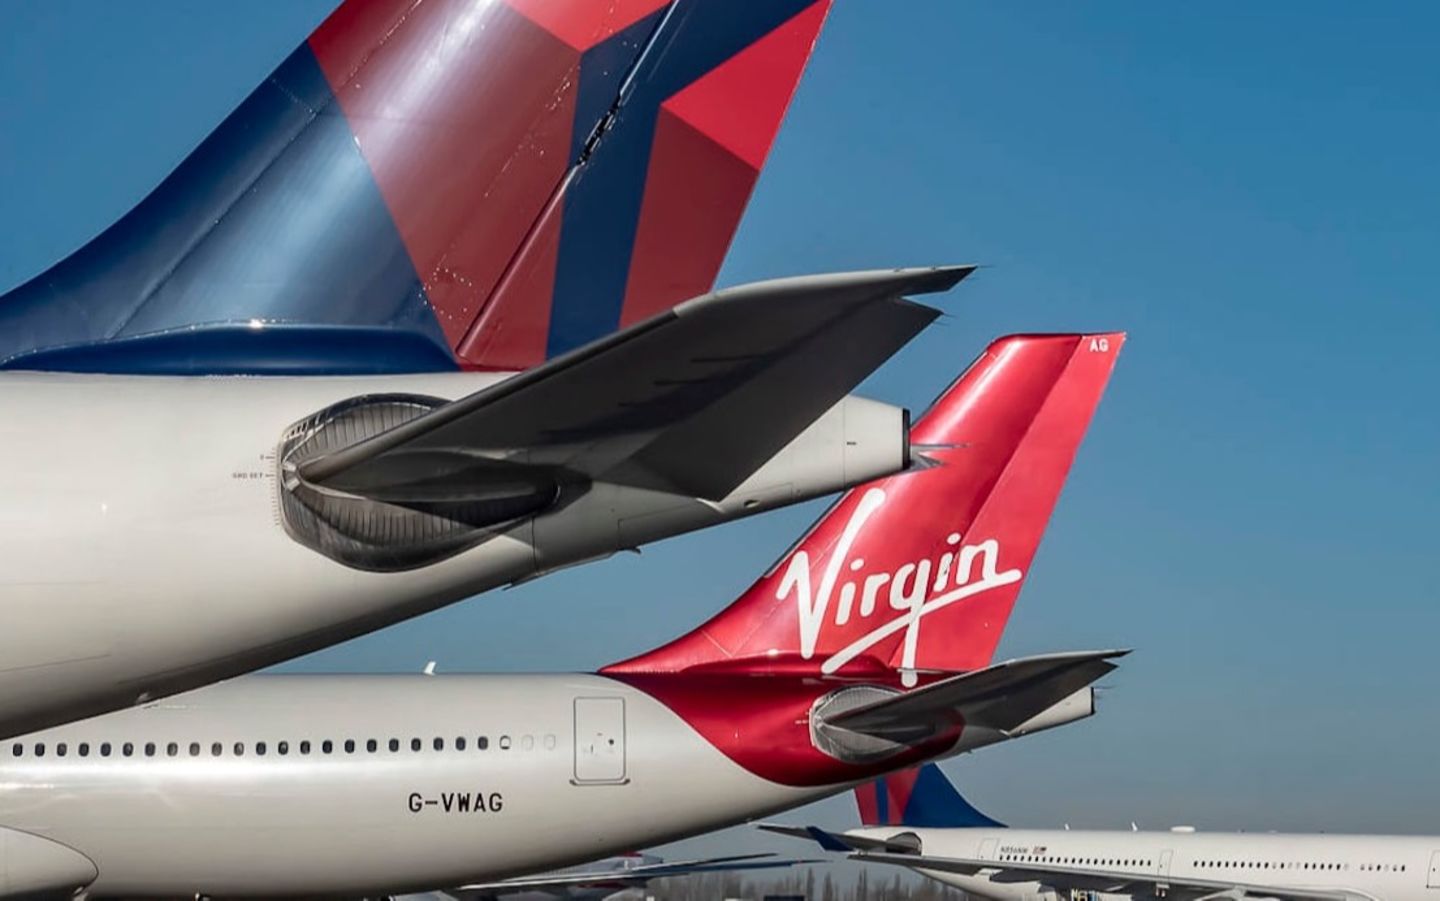 The Virgin Atlantic logo on a plane